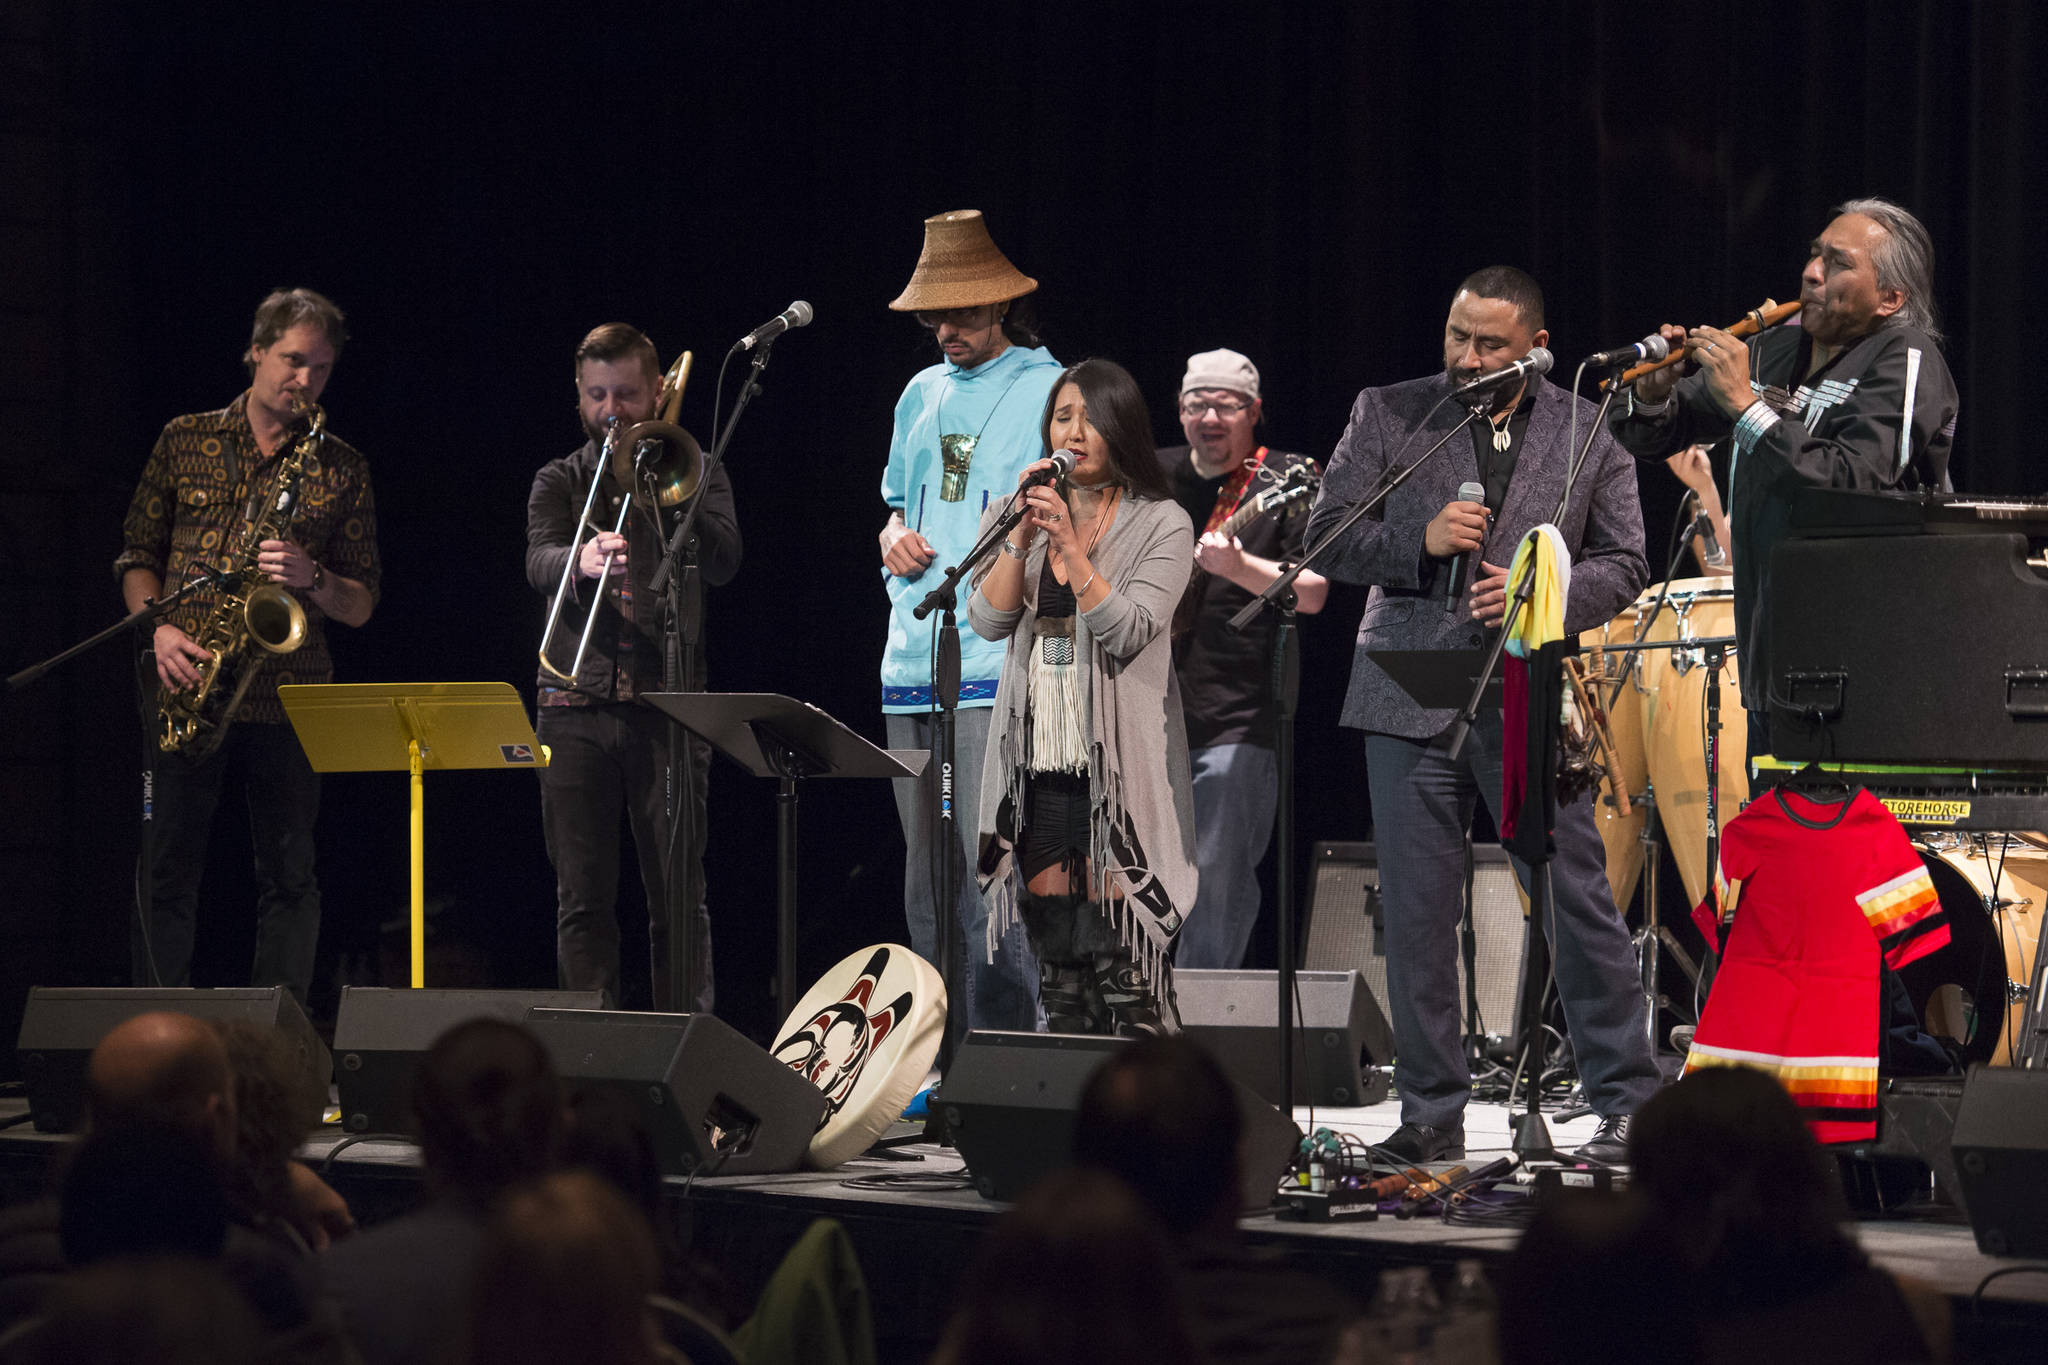 Members of Khu.eex’ perform at Centennial Hall on Monday, Jan. 28, 2019. (Michael Penn | Juneau Empire)